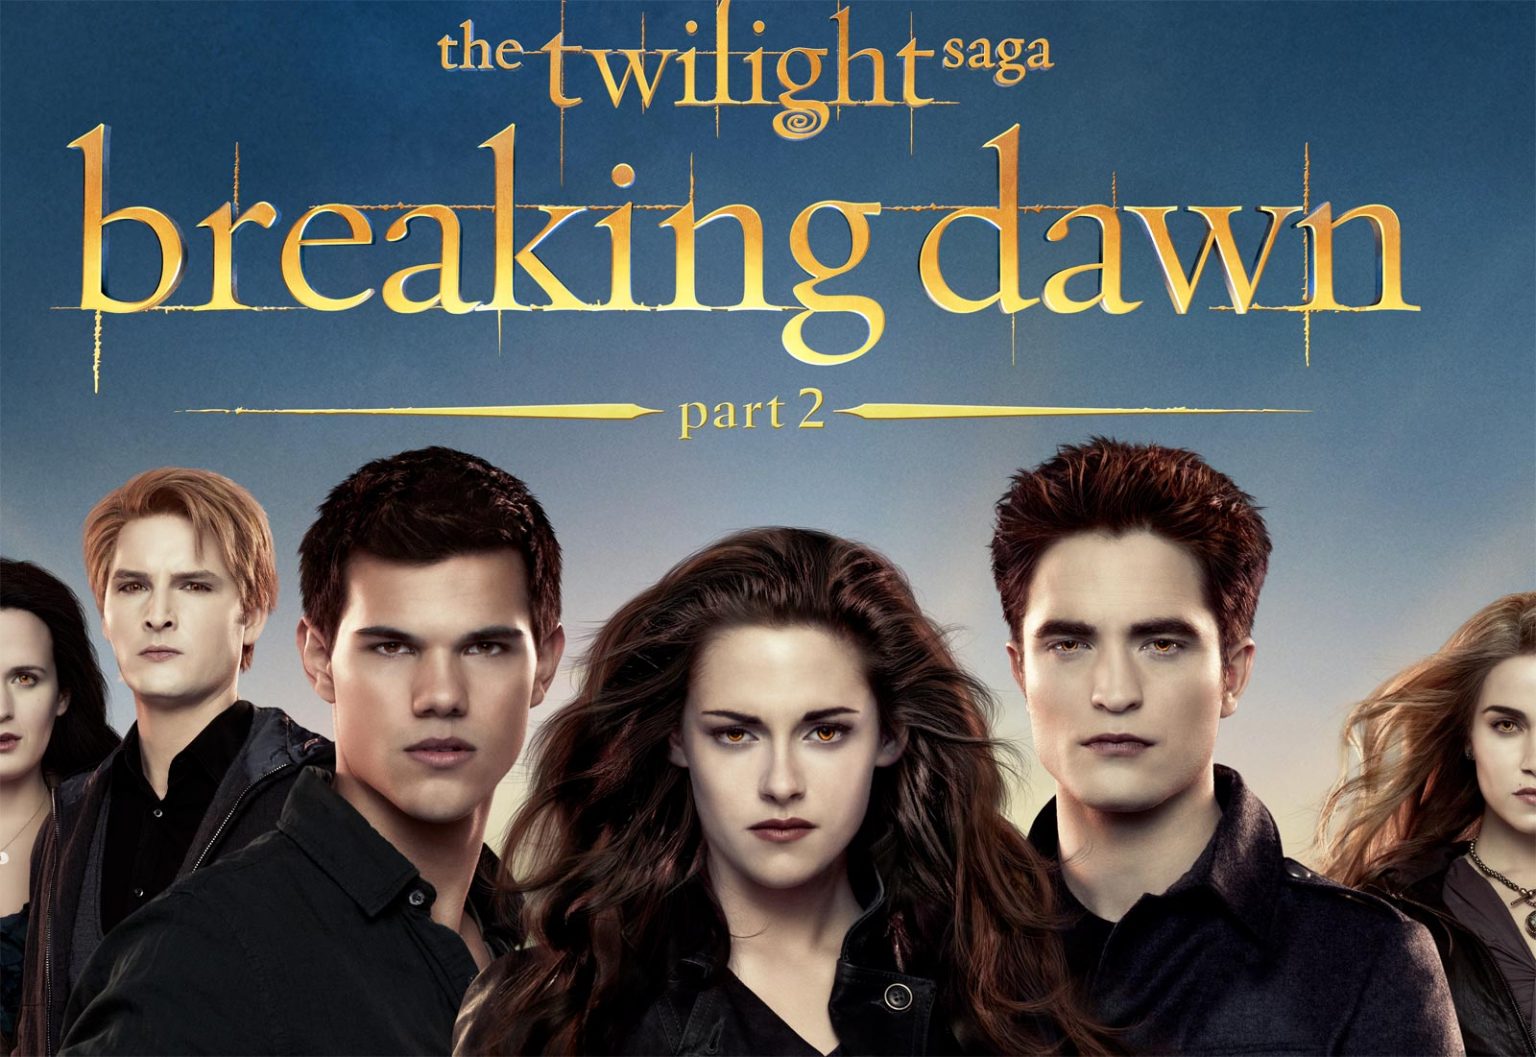 instal the new for mac The Twilight Saga: Breaking Dawn, Part 2